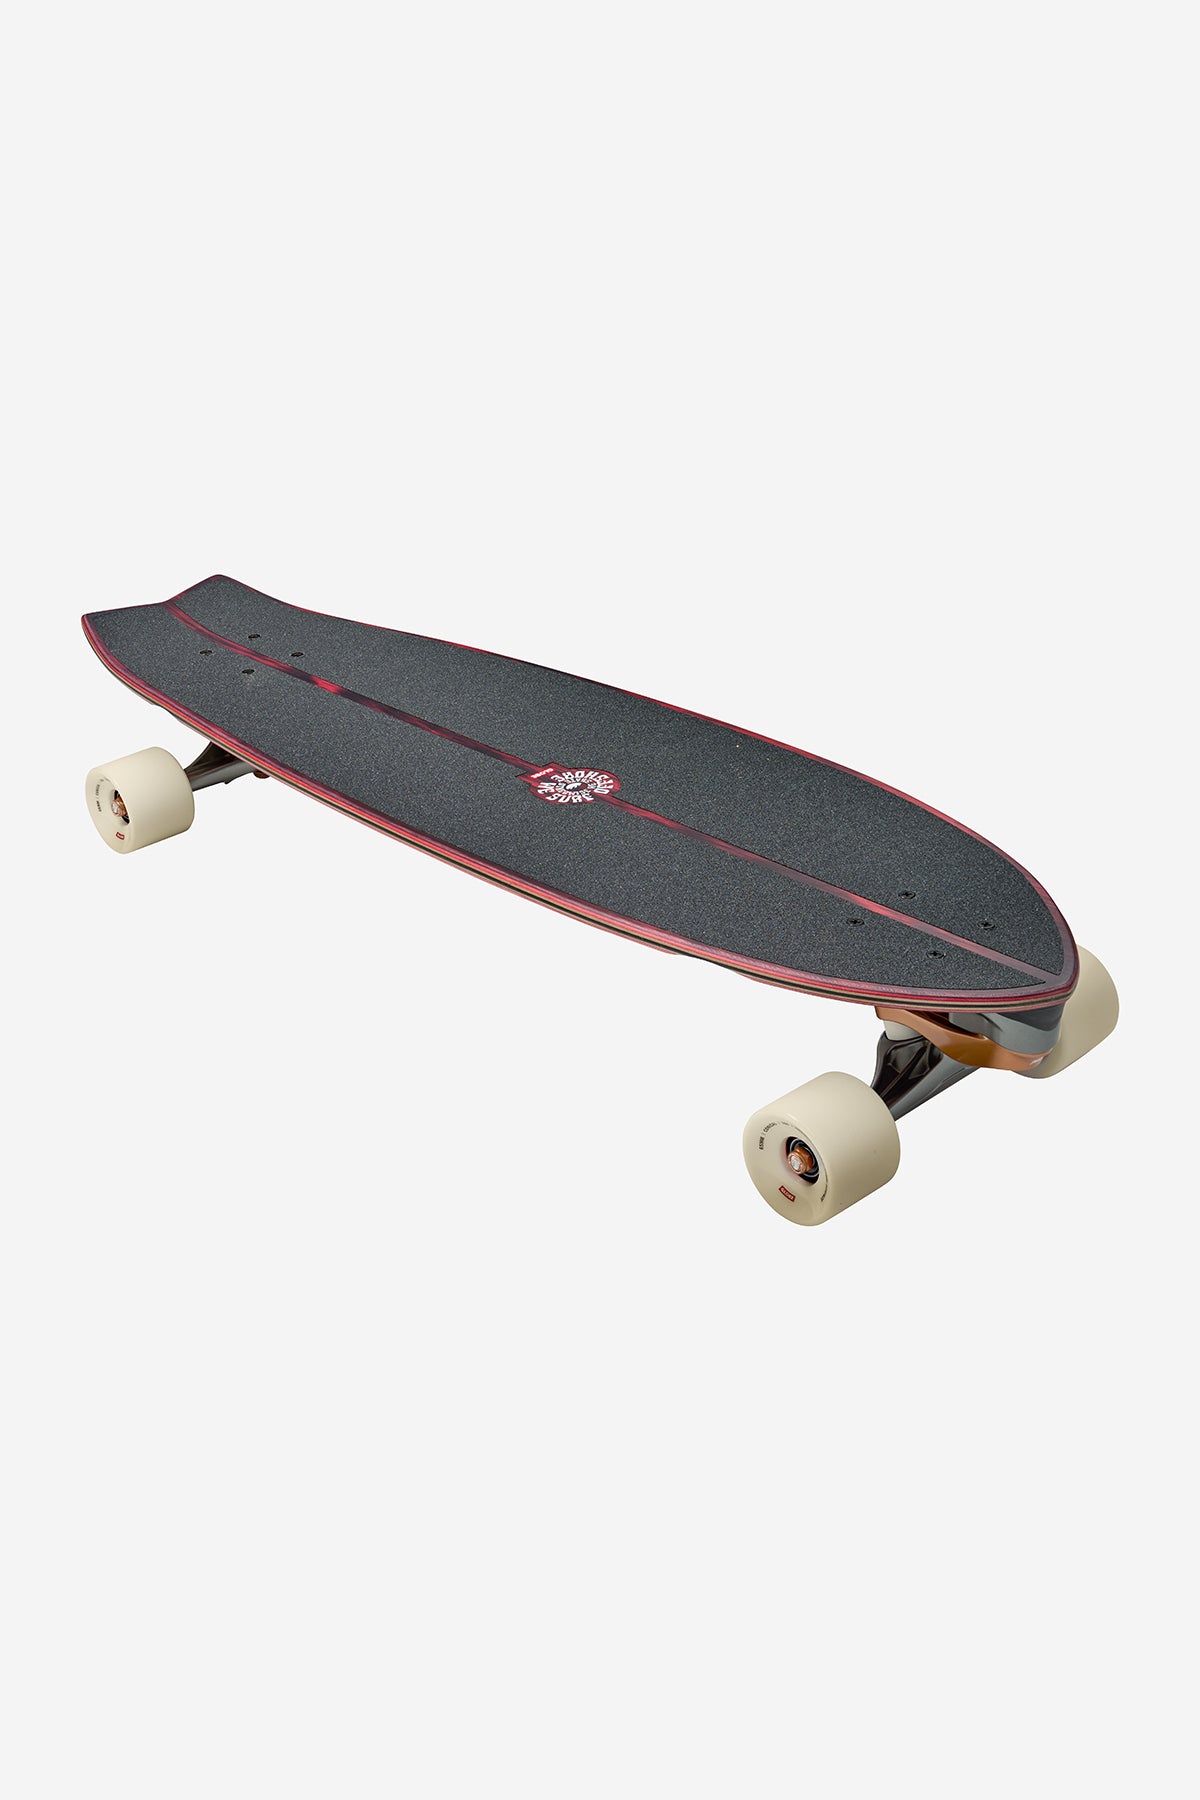 chromantic ss last in 33" surf skateboard